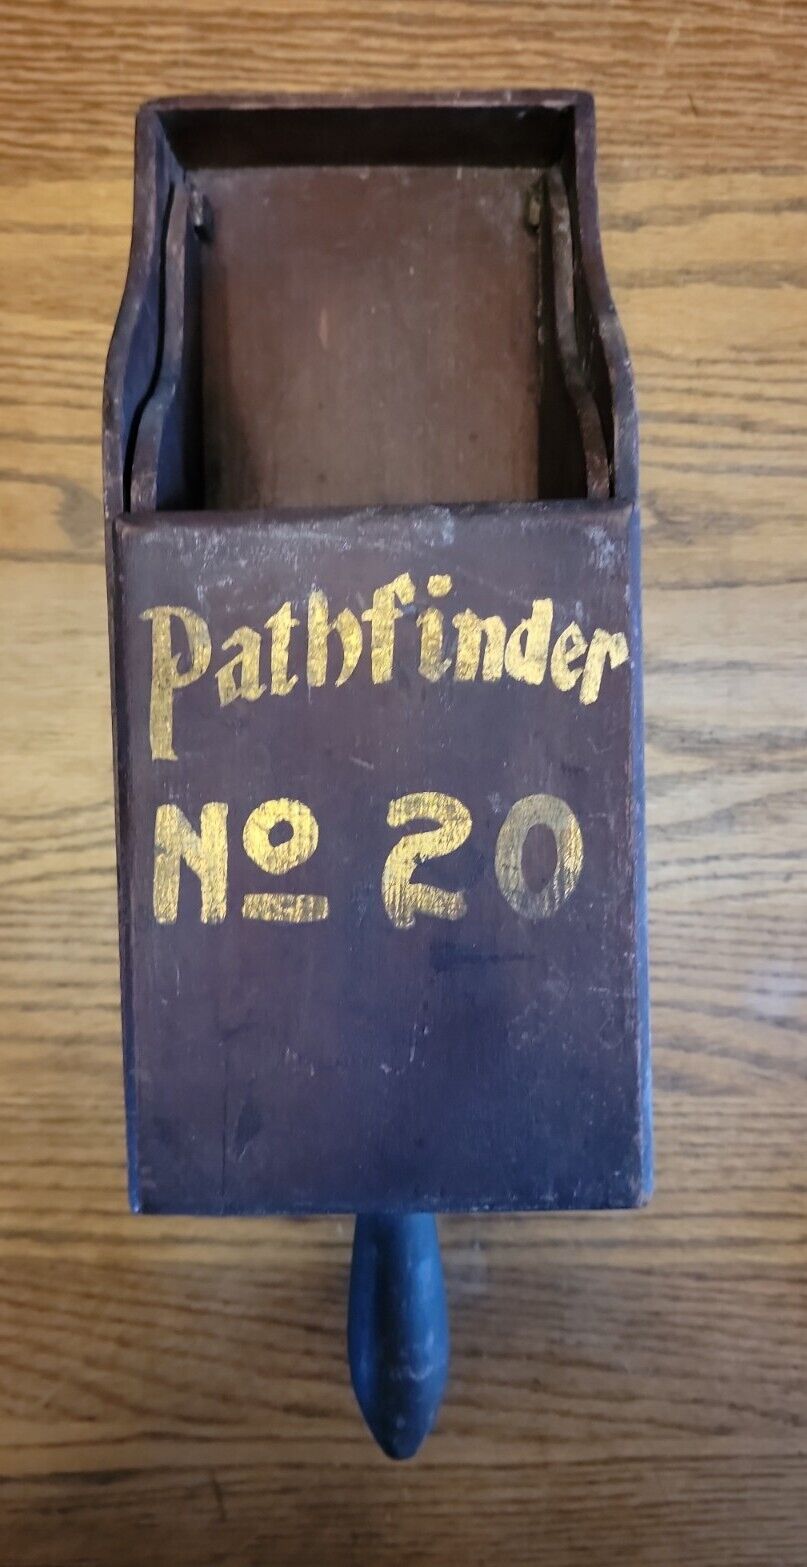 PATHFINDER NO 20 ANTIQUE BALLOT BOX MARBLE BLACK BALL VOTING FRATERNAL VTG 19thC